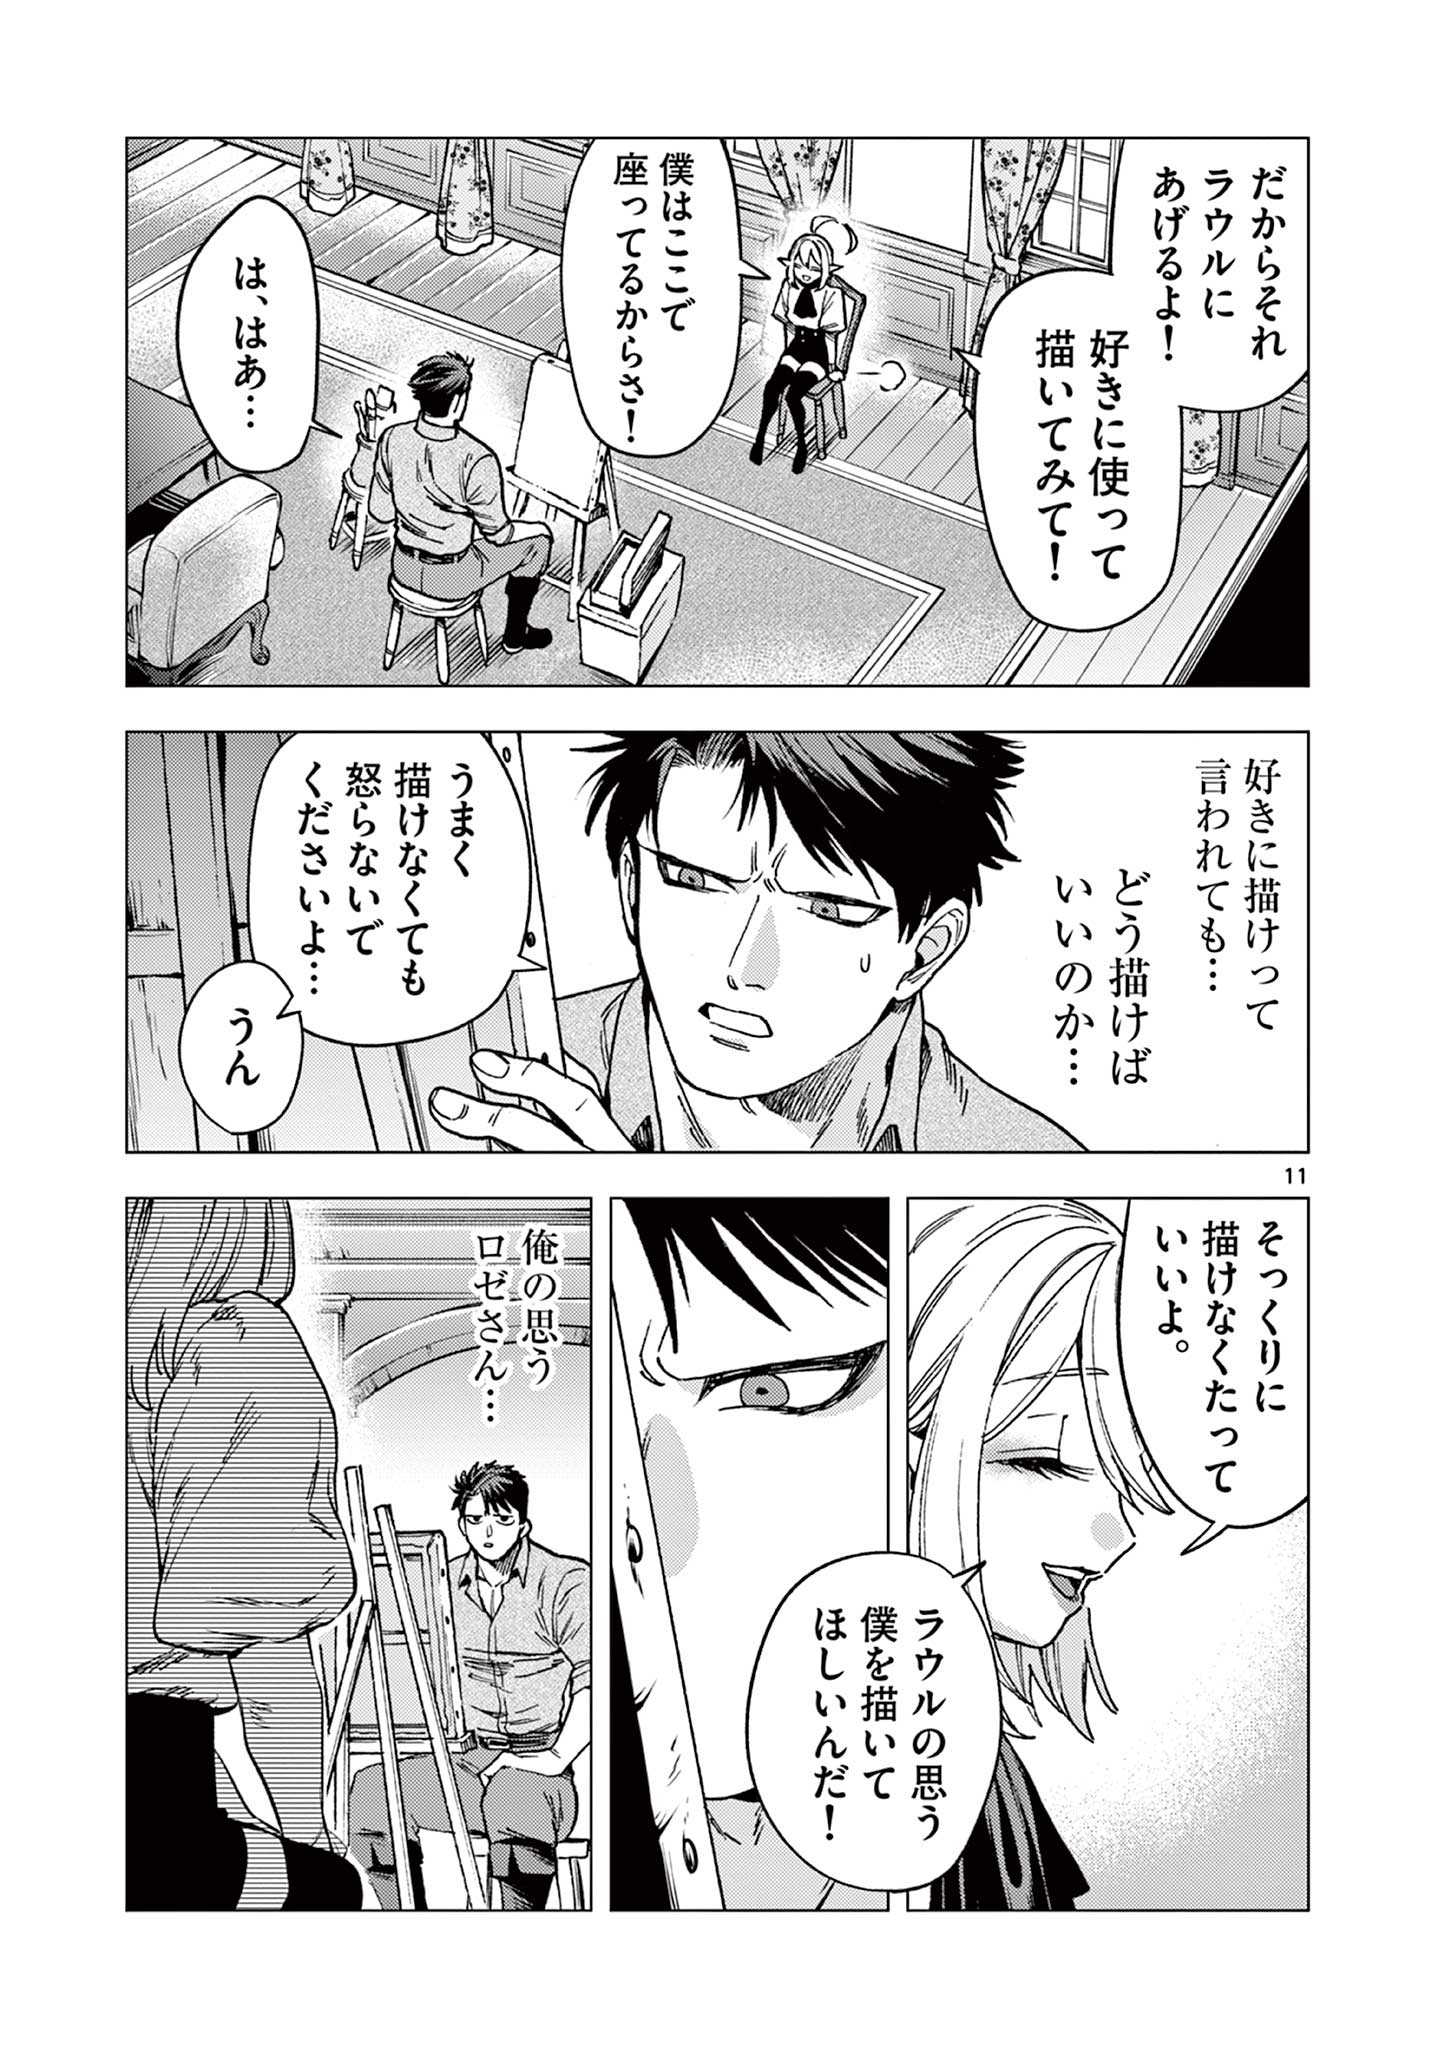 Raul to Kyuuketsuki - Chapter 2 - Page 11